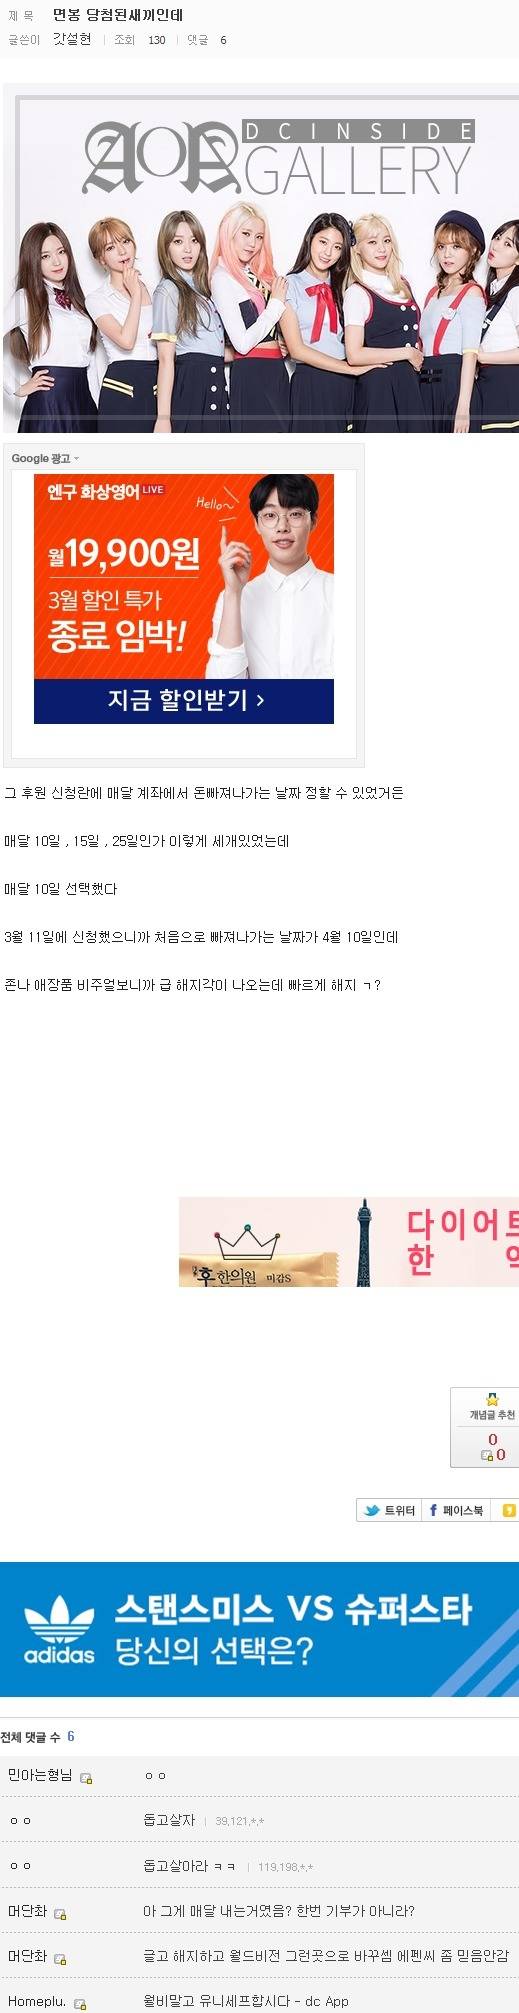 AOA 설현한테 애장품 면봉받고 현타온 남팬 | 인스티즈